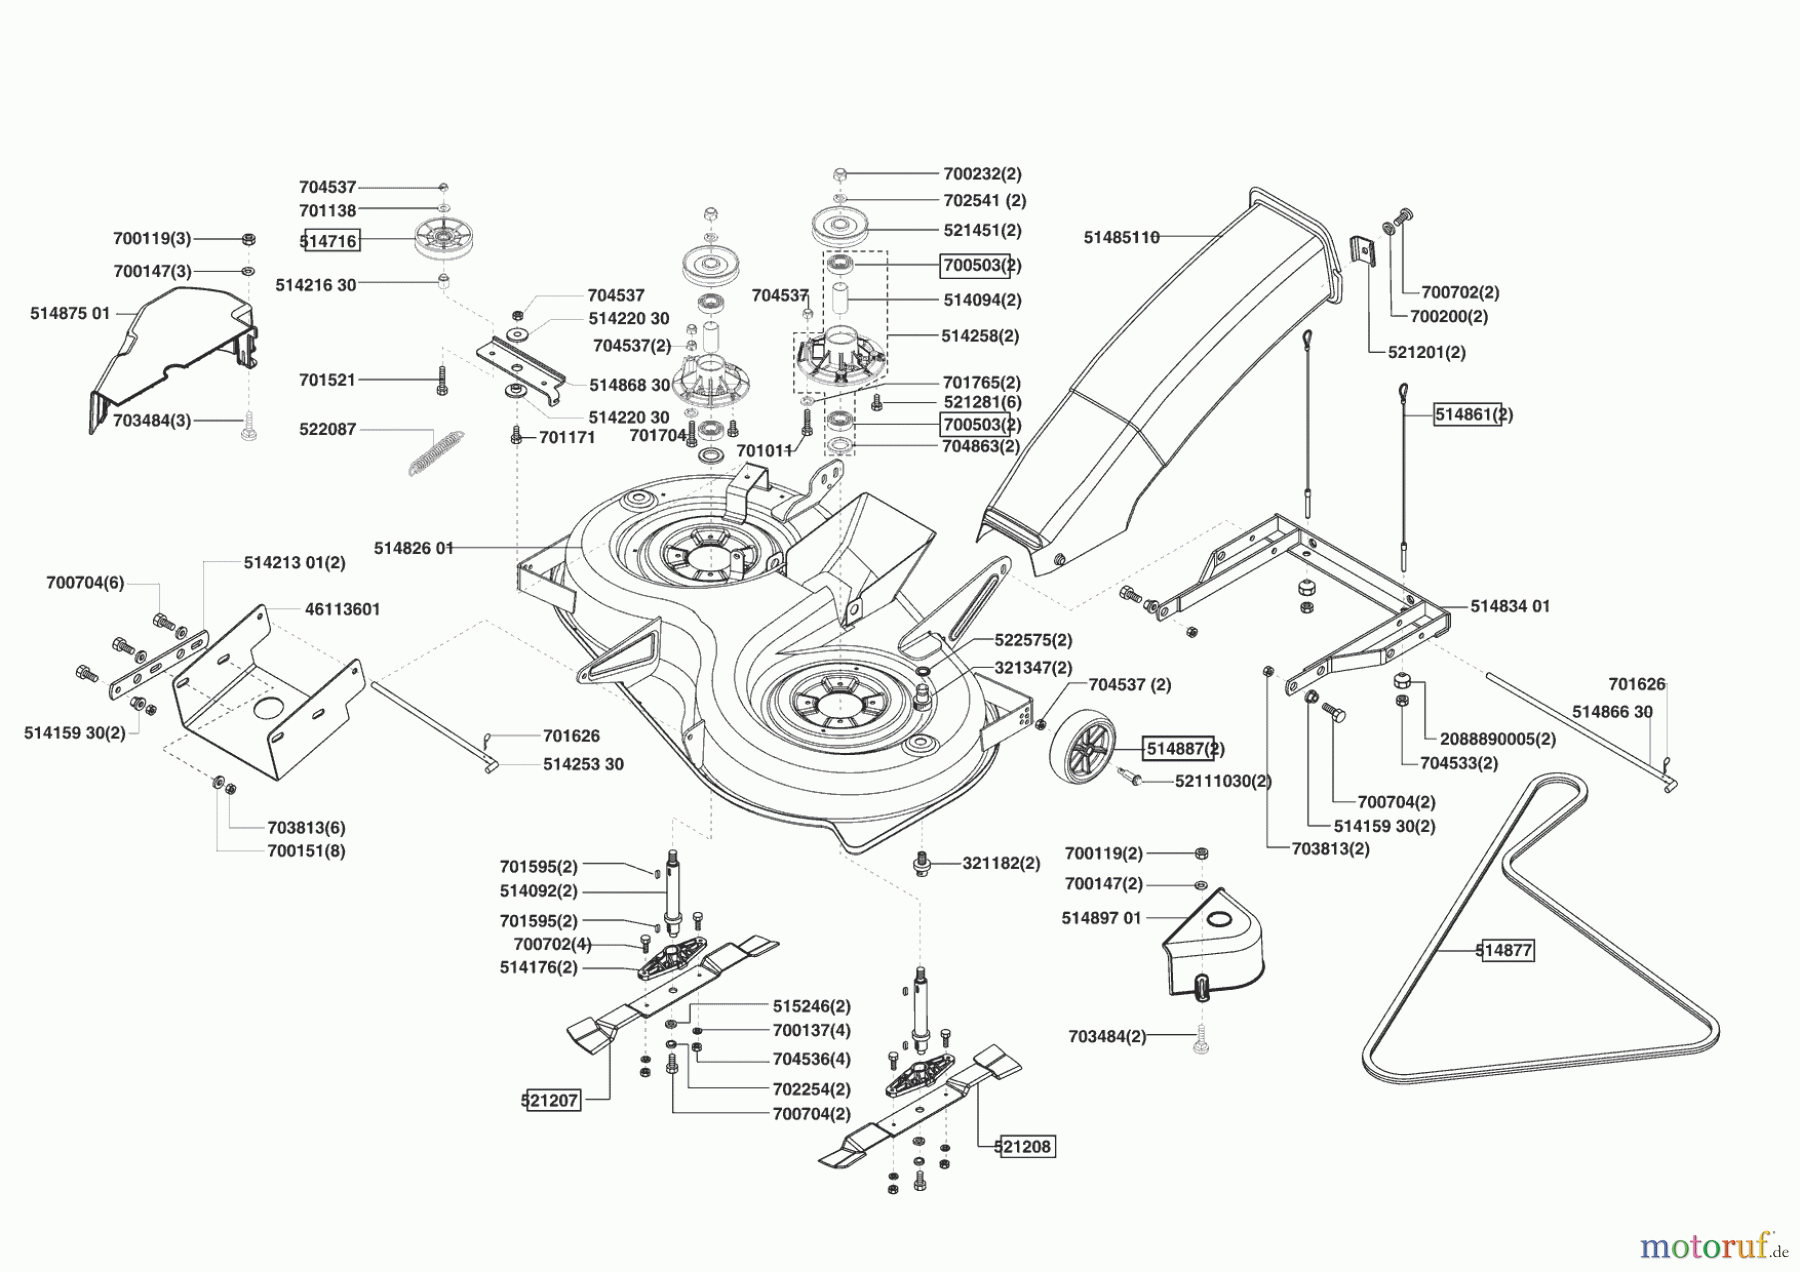  AL-KO Gartentechnik Rasentraktor Comfort T1500 Seite 5